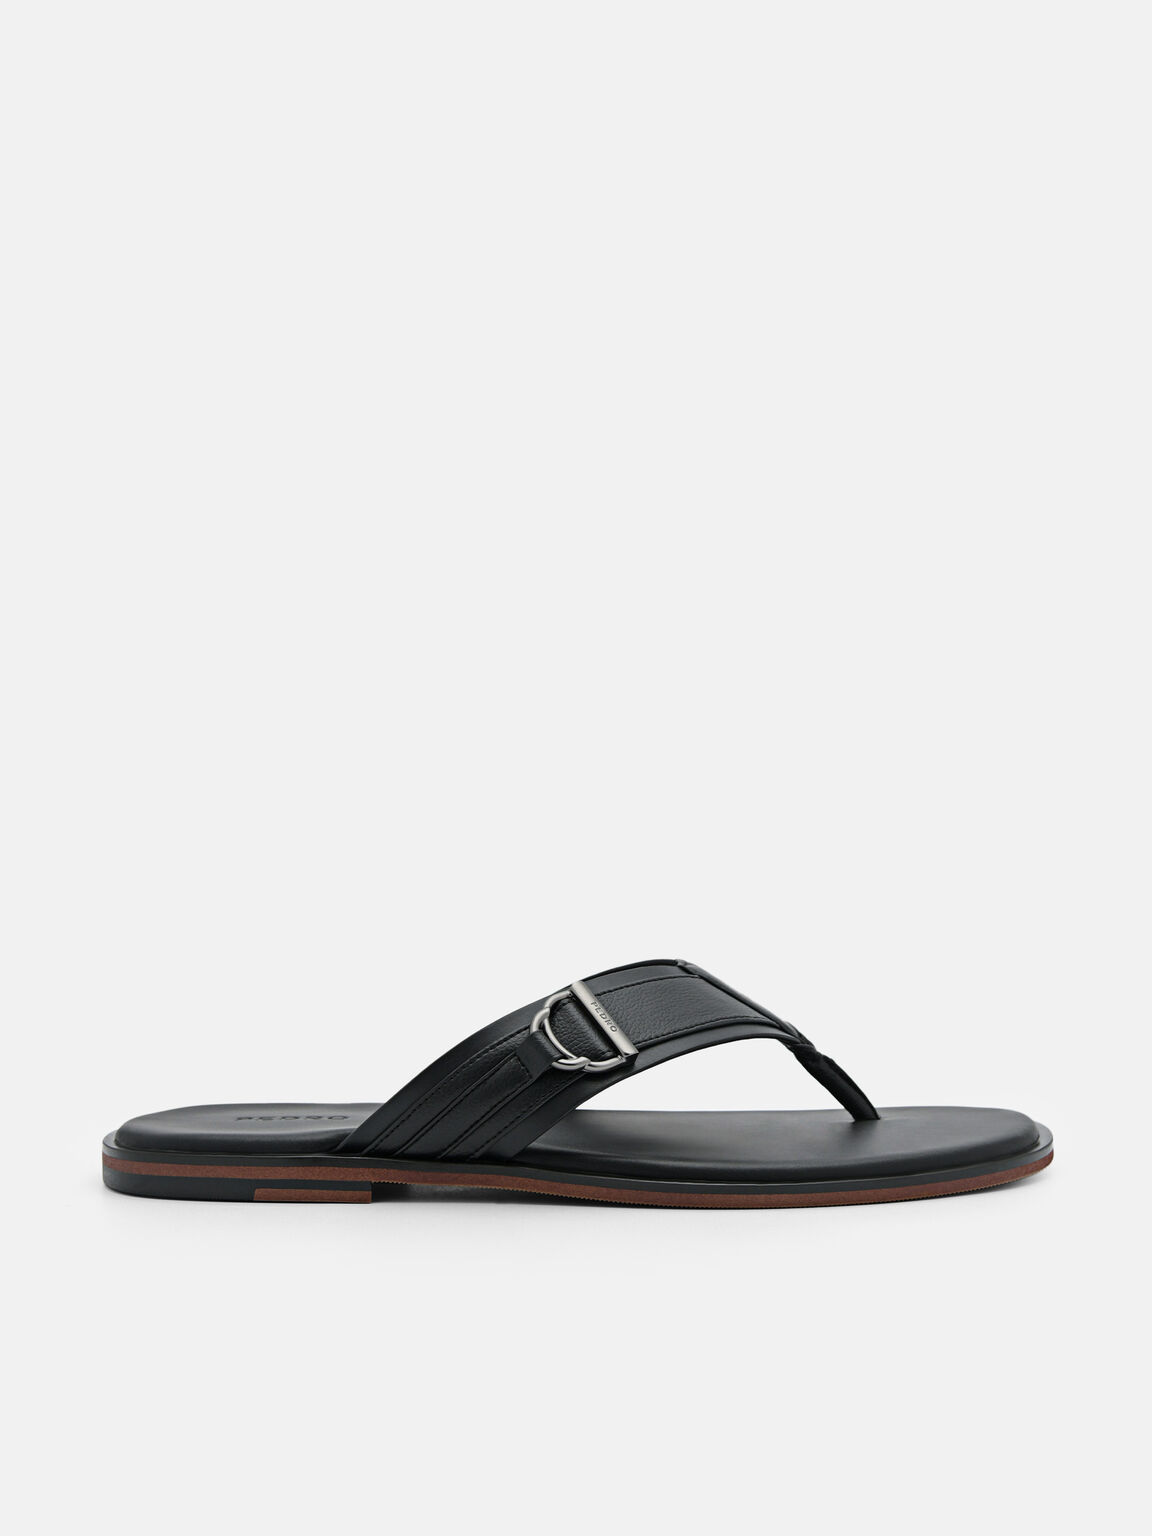 Jackson Thong Sandals, Black, hi-res